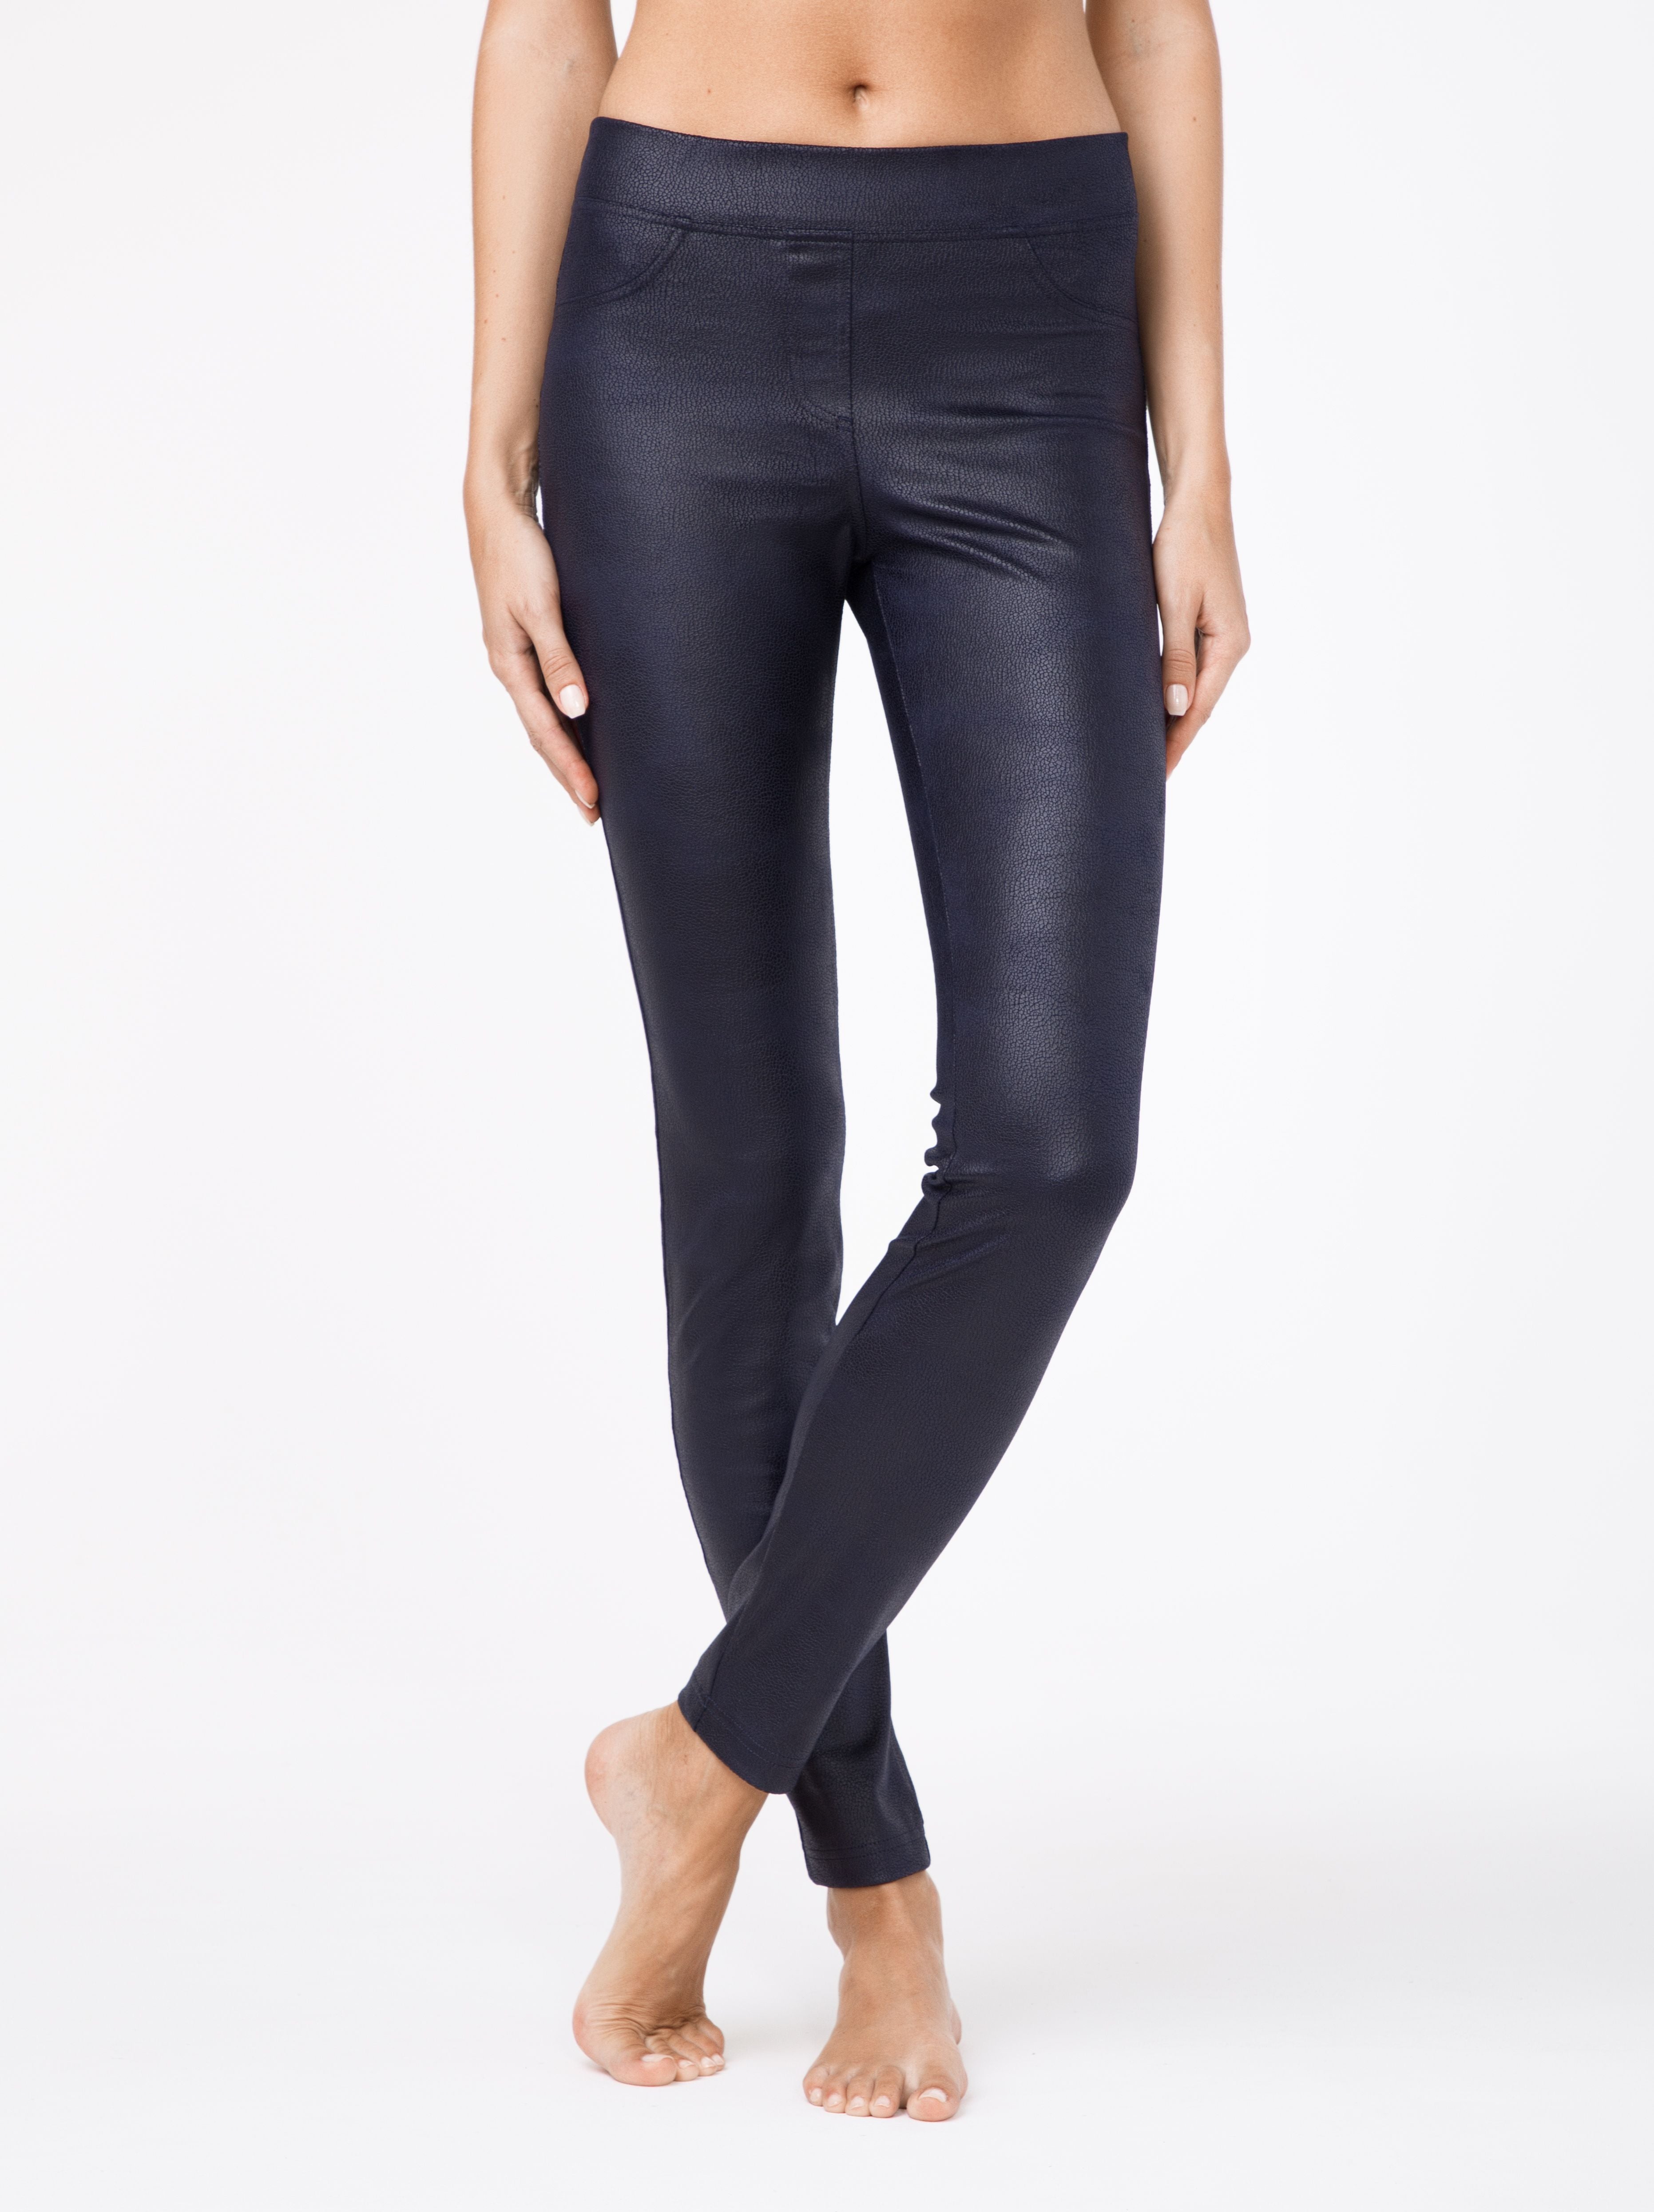 leather Leggings womens leggings Gleam by Conte Elegant navy dark blue with pockets